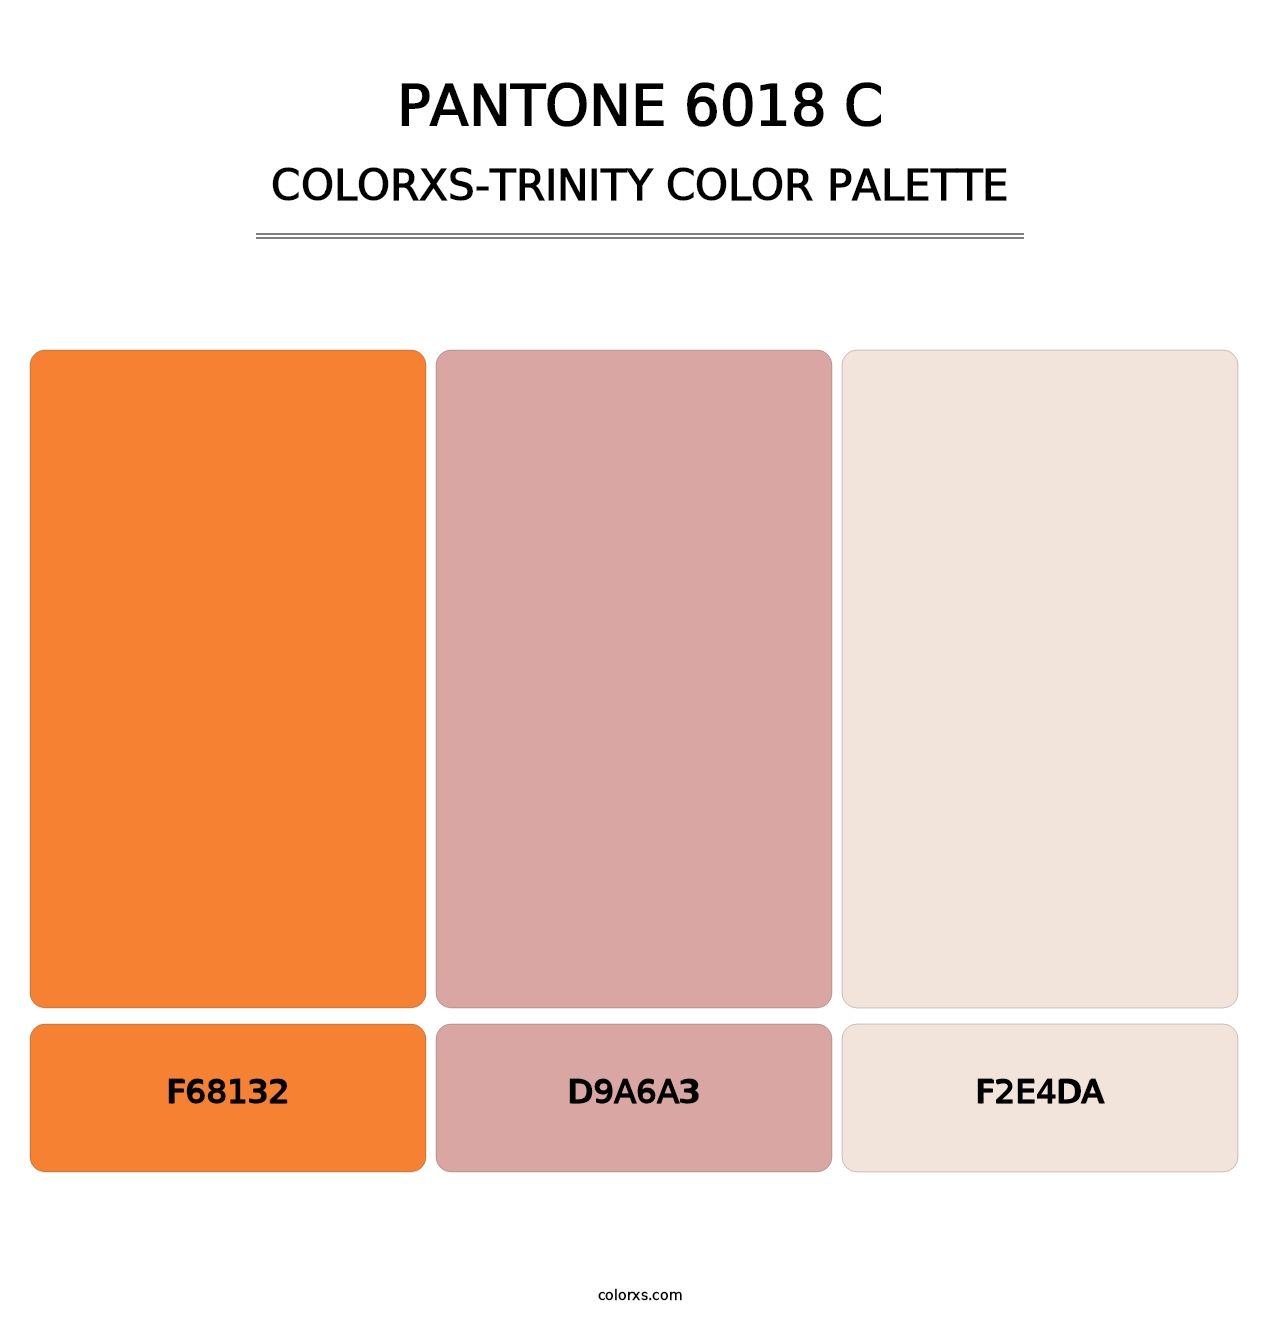 PANTONE 6018 C - Colorxs Trinity Palette